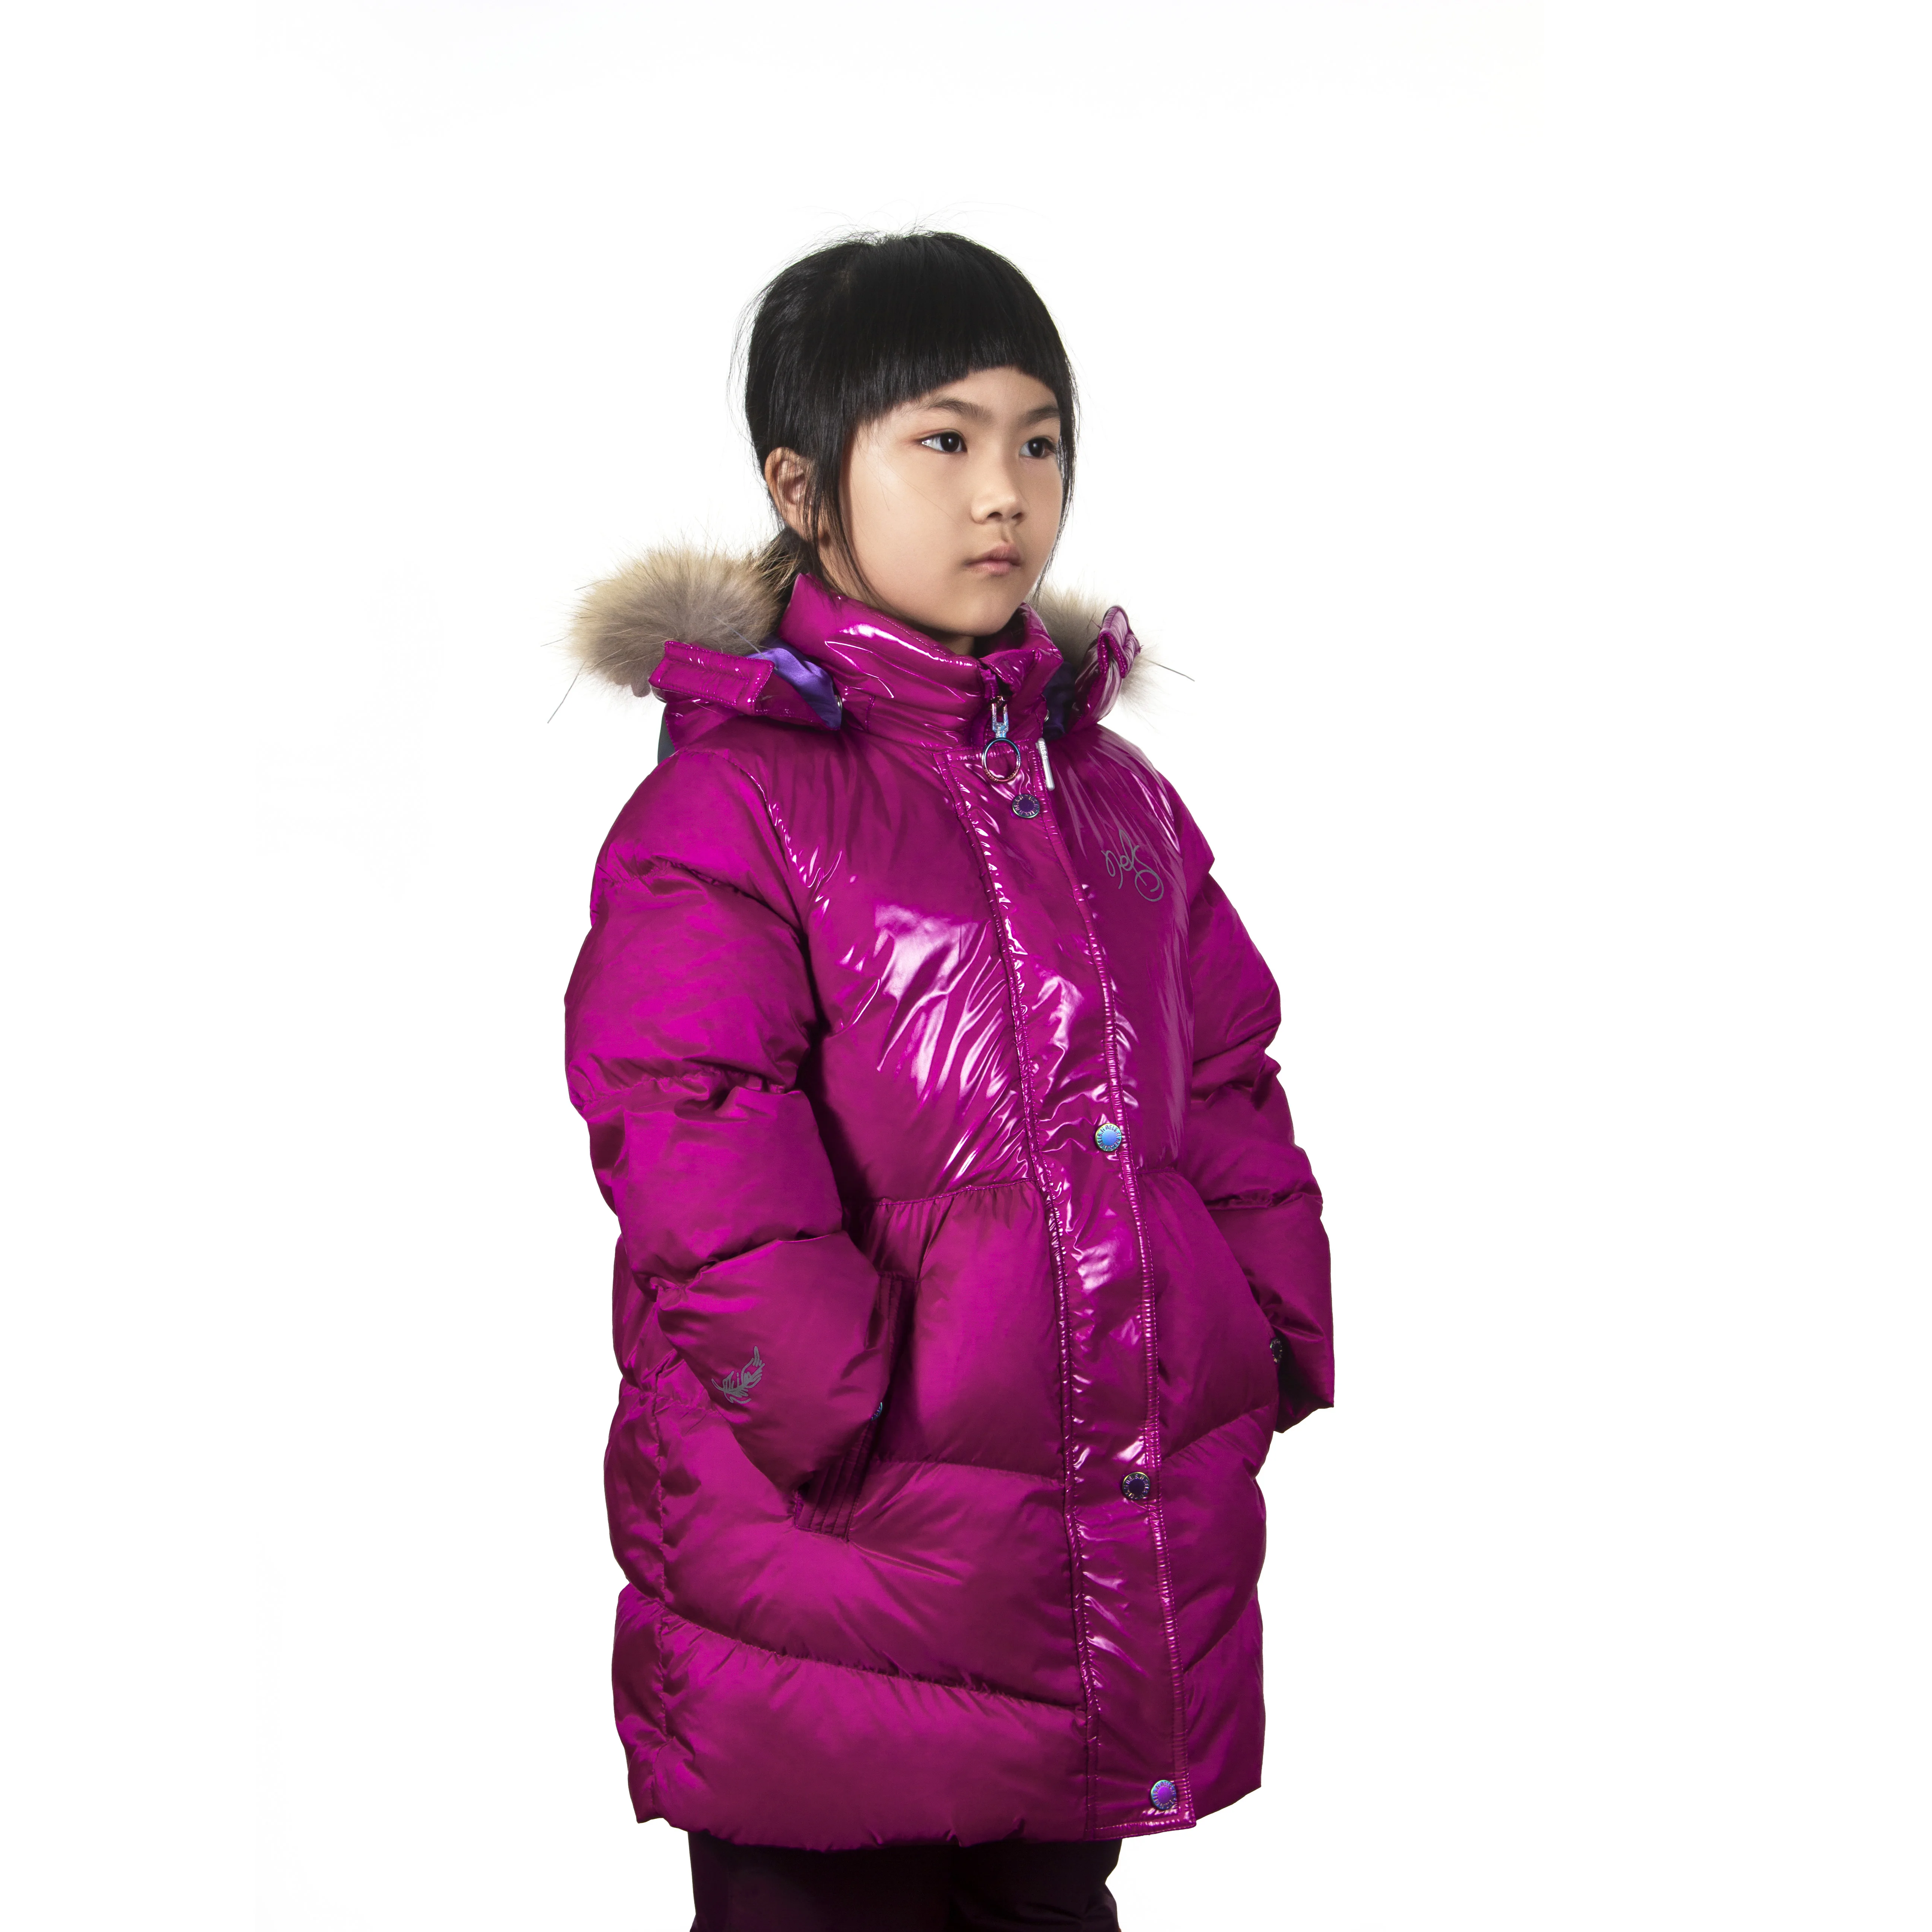 Jianfeng Stylish winter outdoor customized original fur collar long style kids down hoodie jacket with zipper